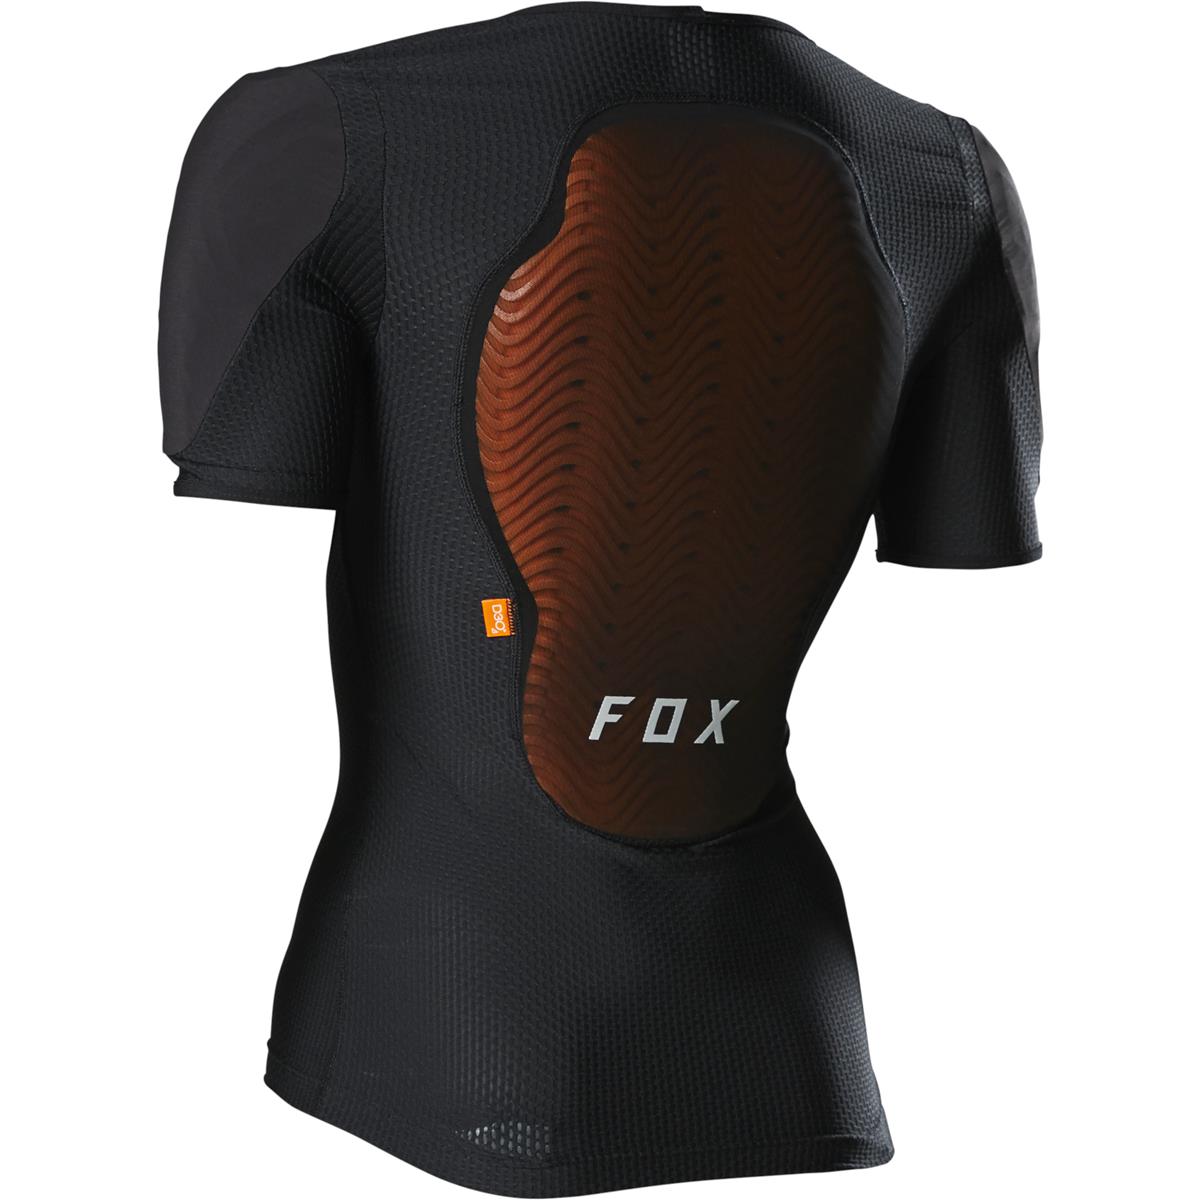 Fox Girls Baseframe Protector Short Black Offroad Shirt | Sleeve Pro Maciag